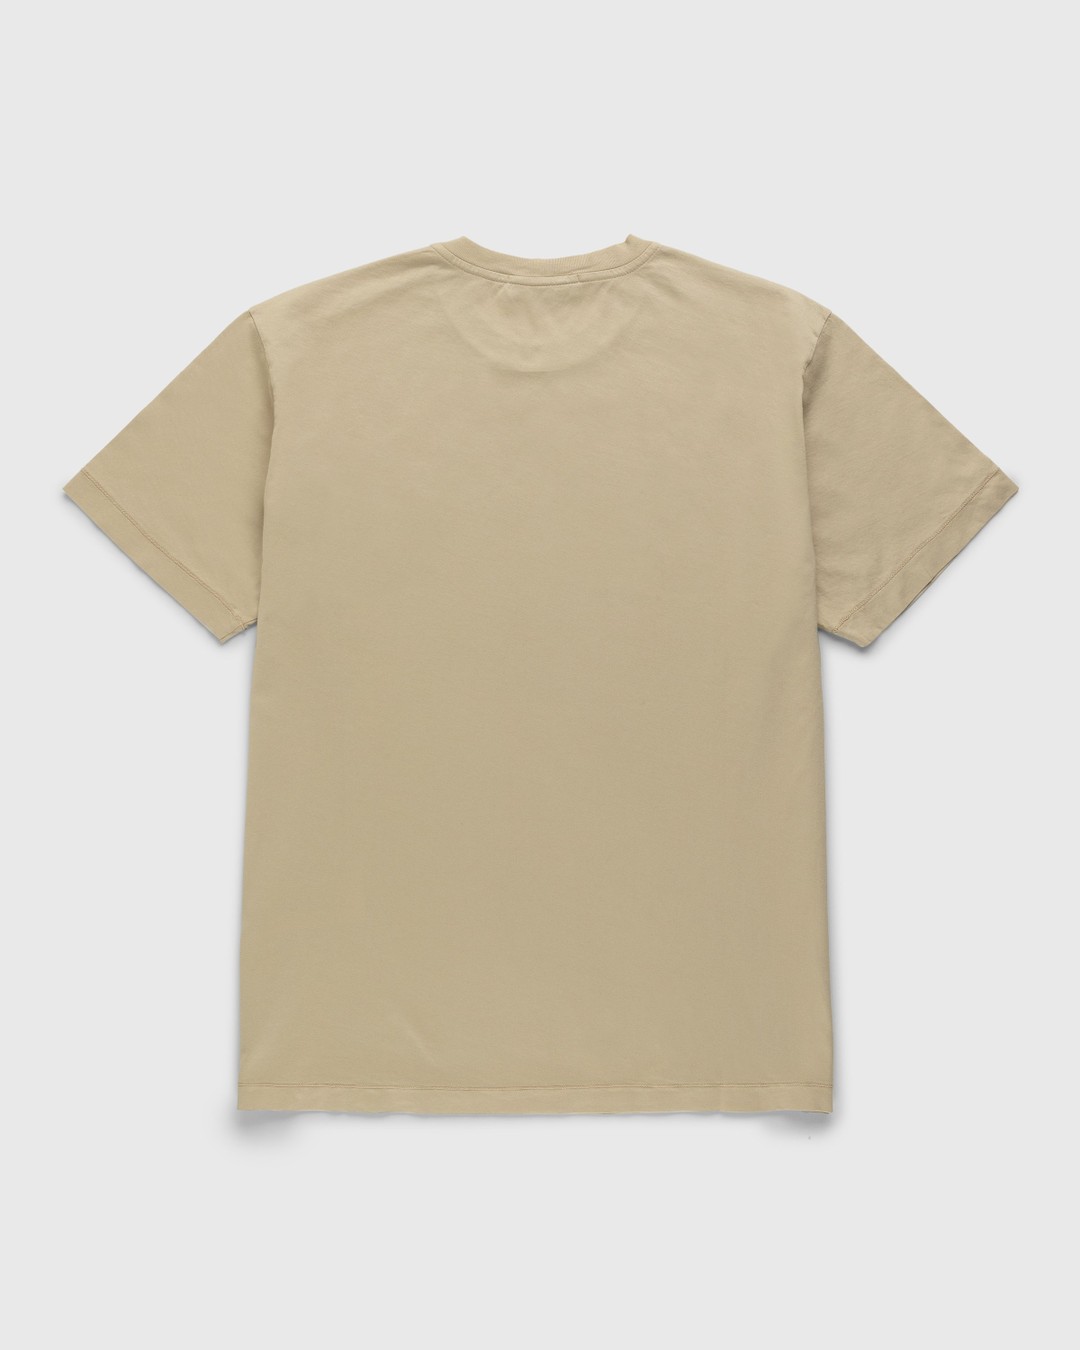 Stone Island – Garment-Dyed T-Shirt Beige | Highsnobiety Shop